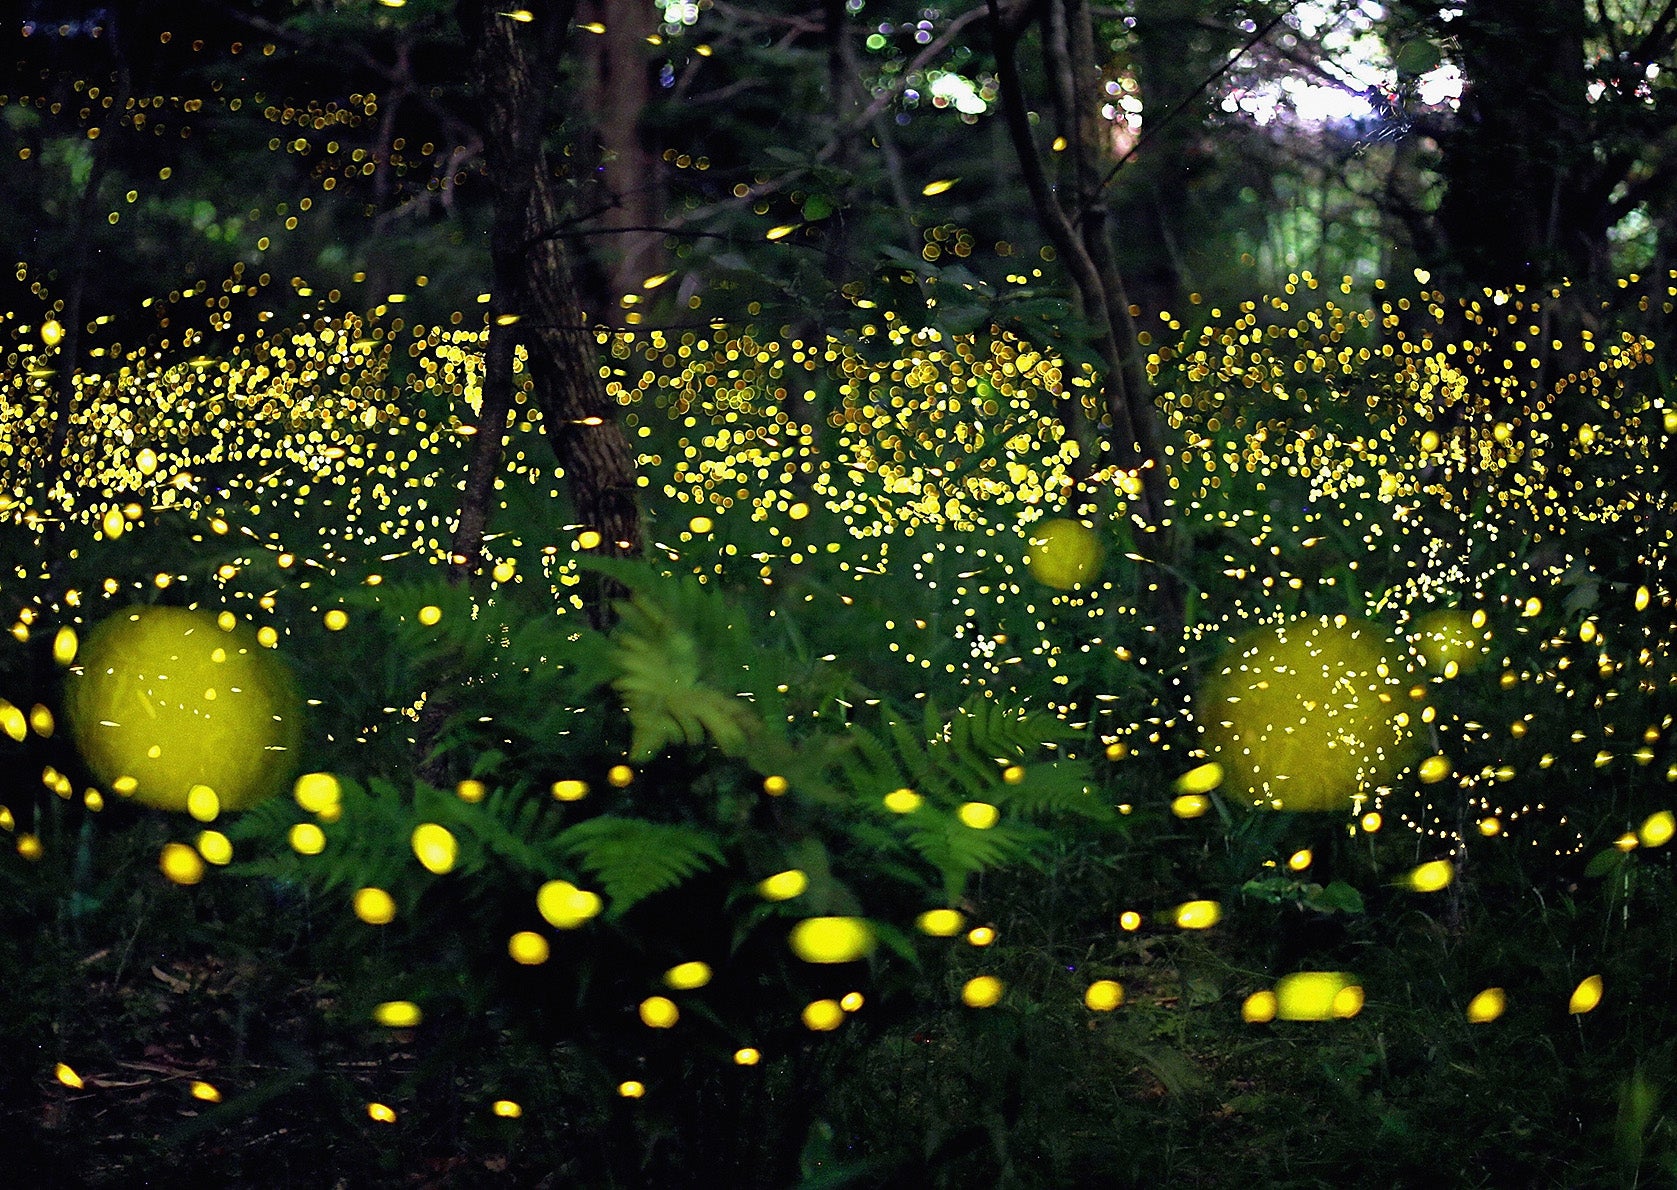 Earth Vignettes: Fireflies